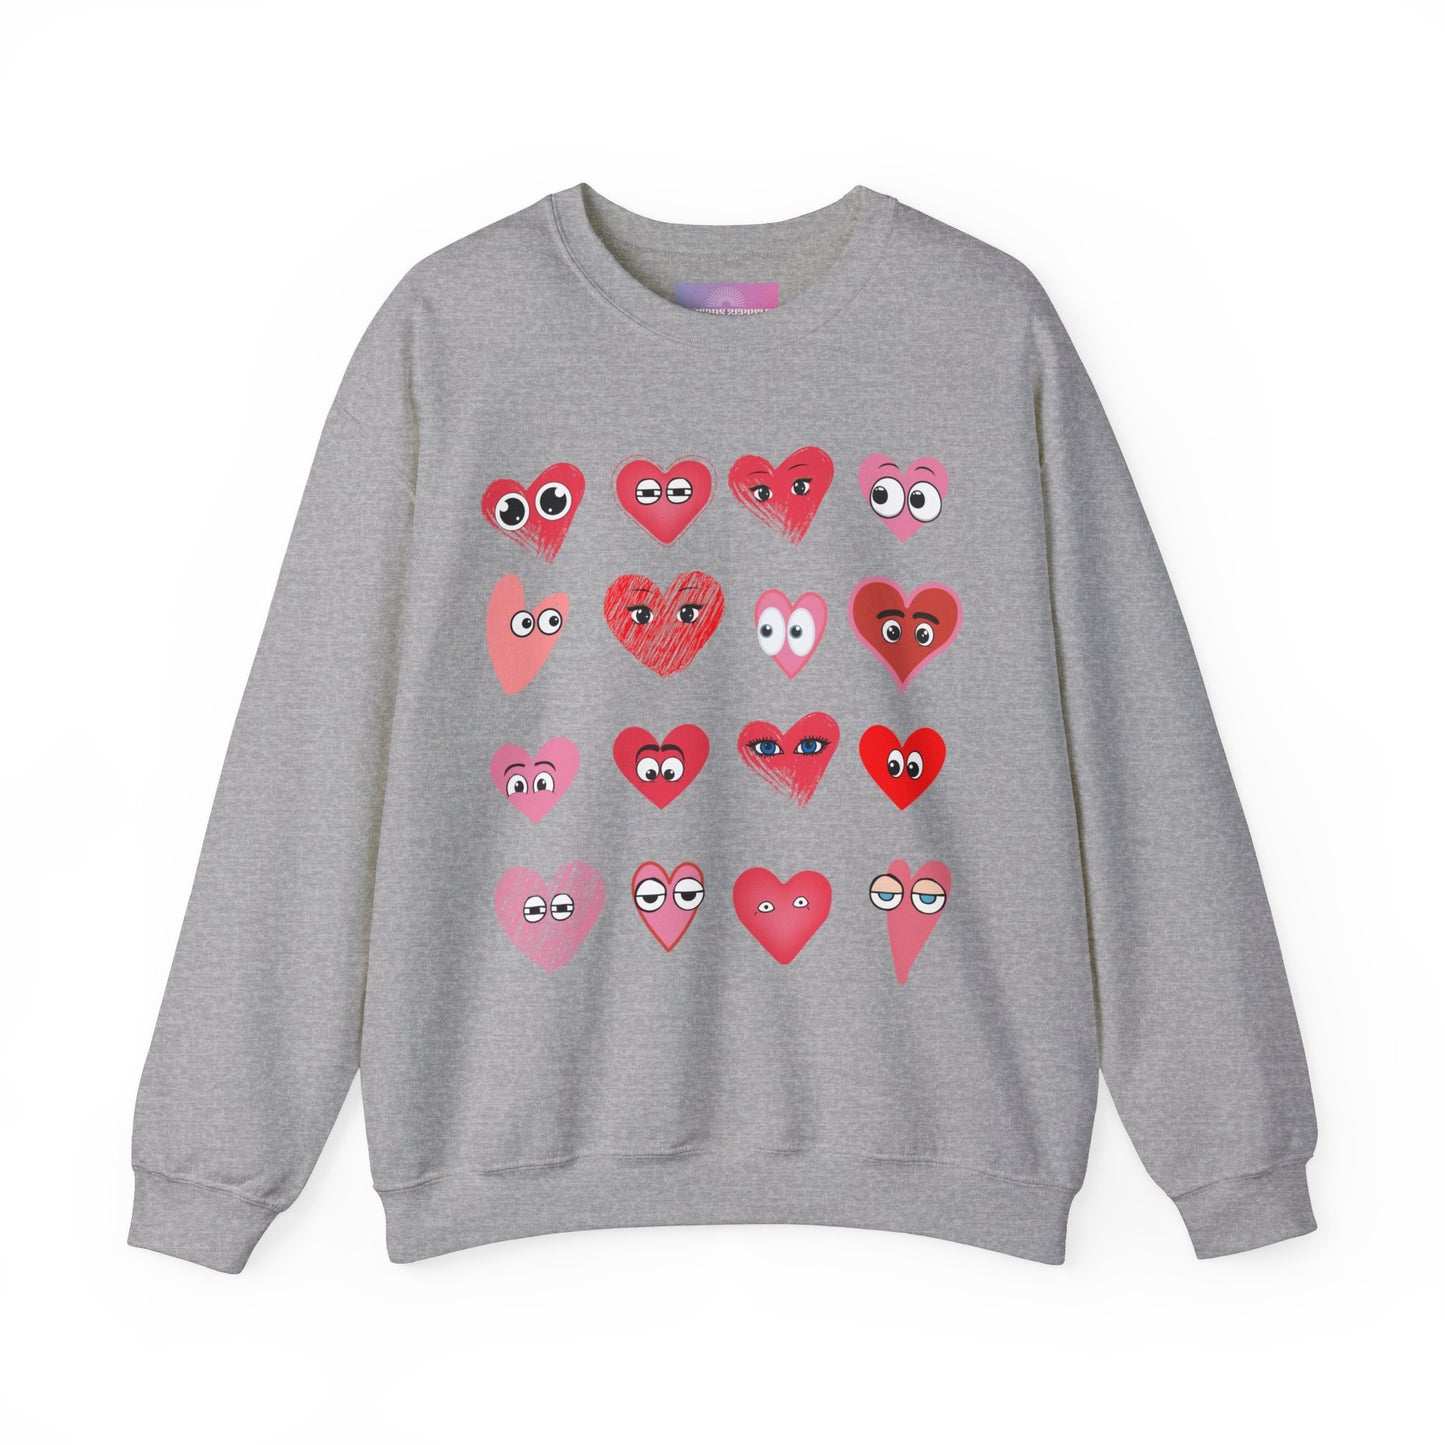 Retro Heart faces Sweatshirt, Retro eyes Valentines Day Sweater, Retro expression Crewneck, Cute Valentines Day Shirt, Premium Crewneck